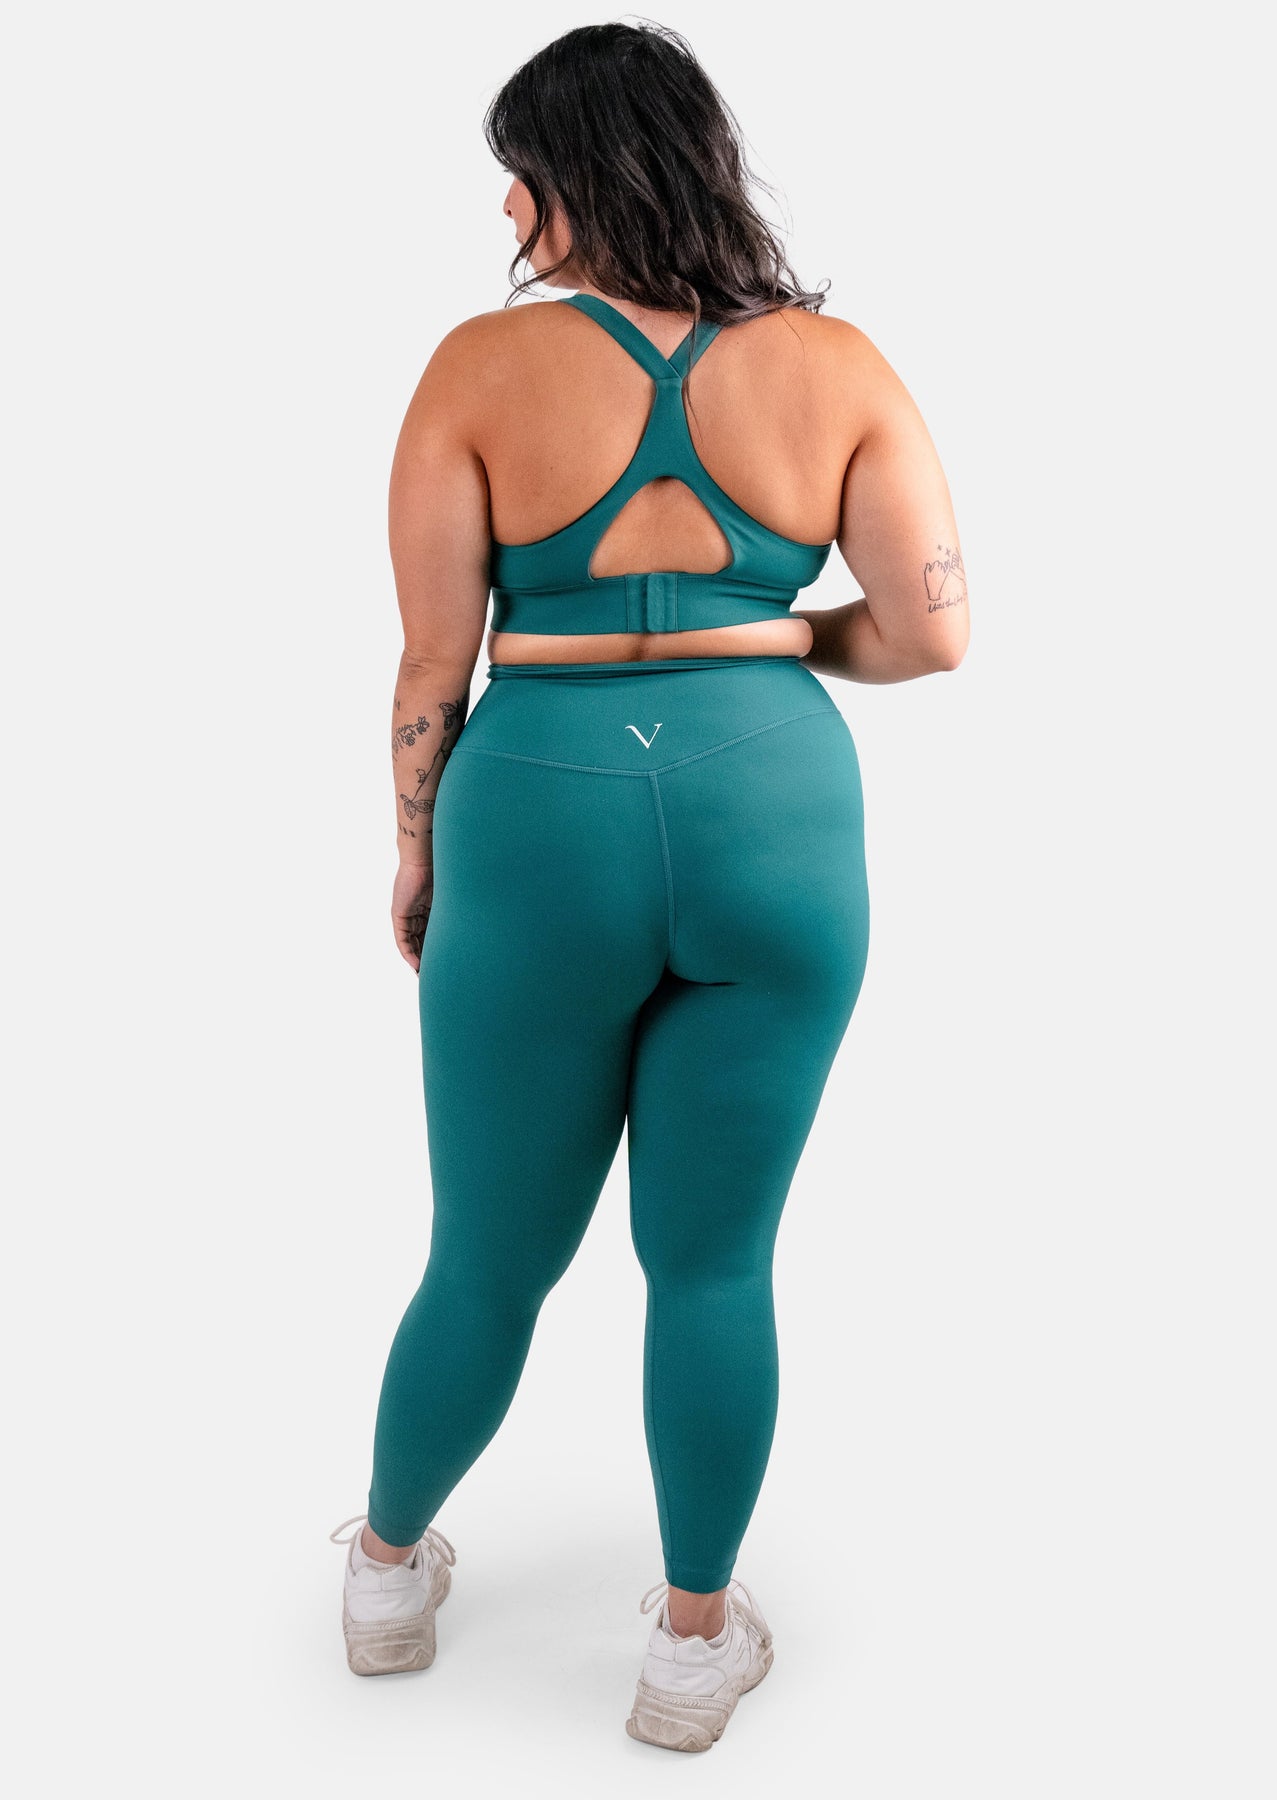 Shefit Green Crossover Waist Green Seamless Workout Pants Size Medium - $28  - From Madi